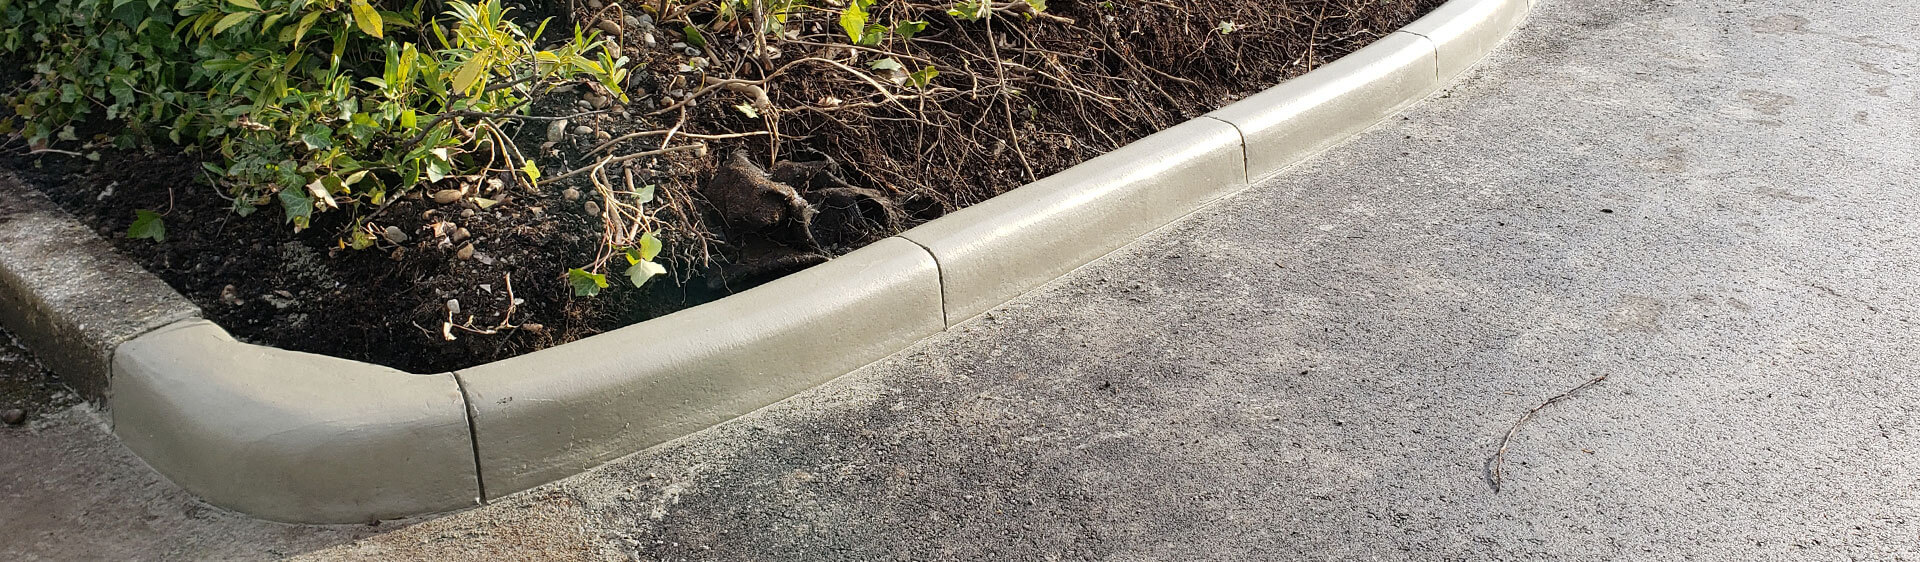 Surrey Concrete Curbing, Garden Edging and Curb Repairs